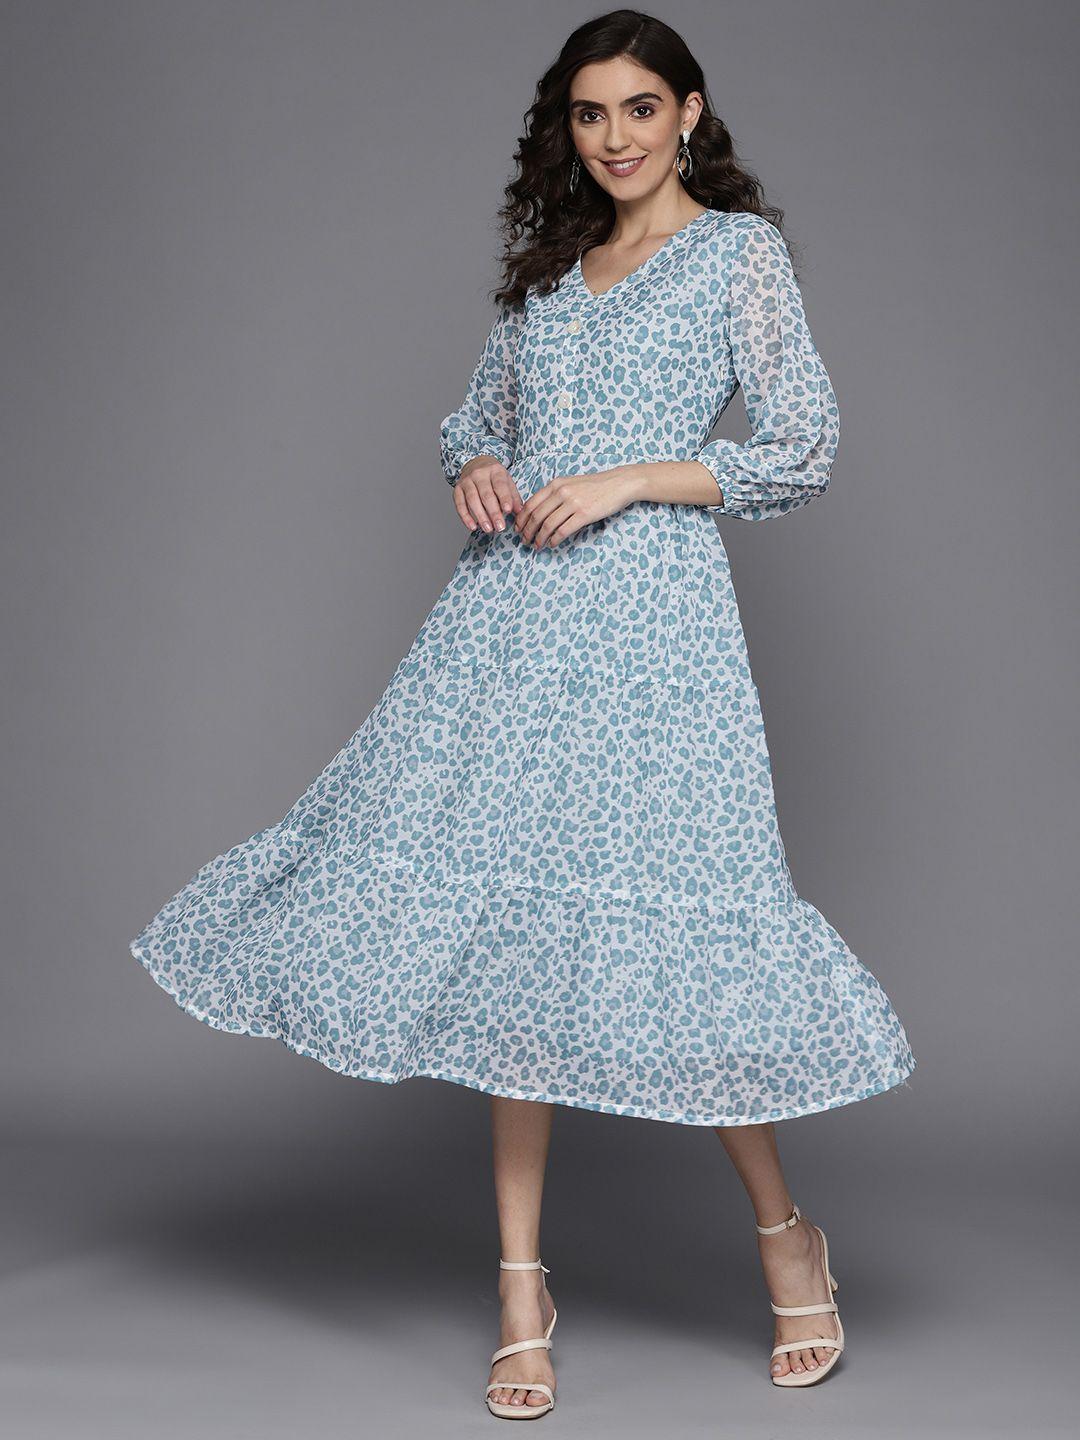 masstani by inddus blue & off white animal print a-line midi dress